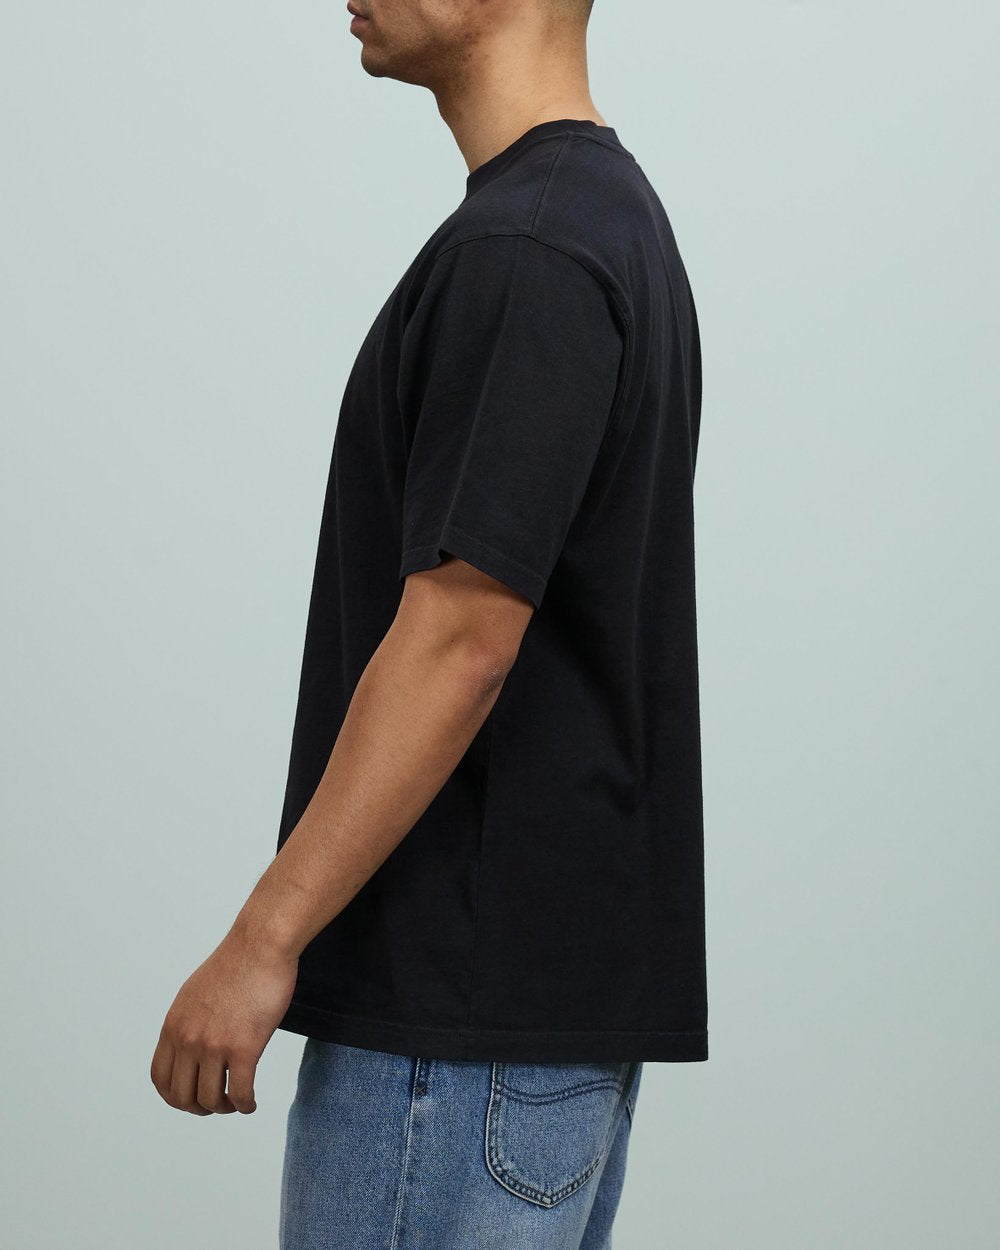 Heavyweight Cotton T-shirt in black